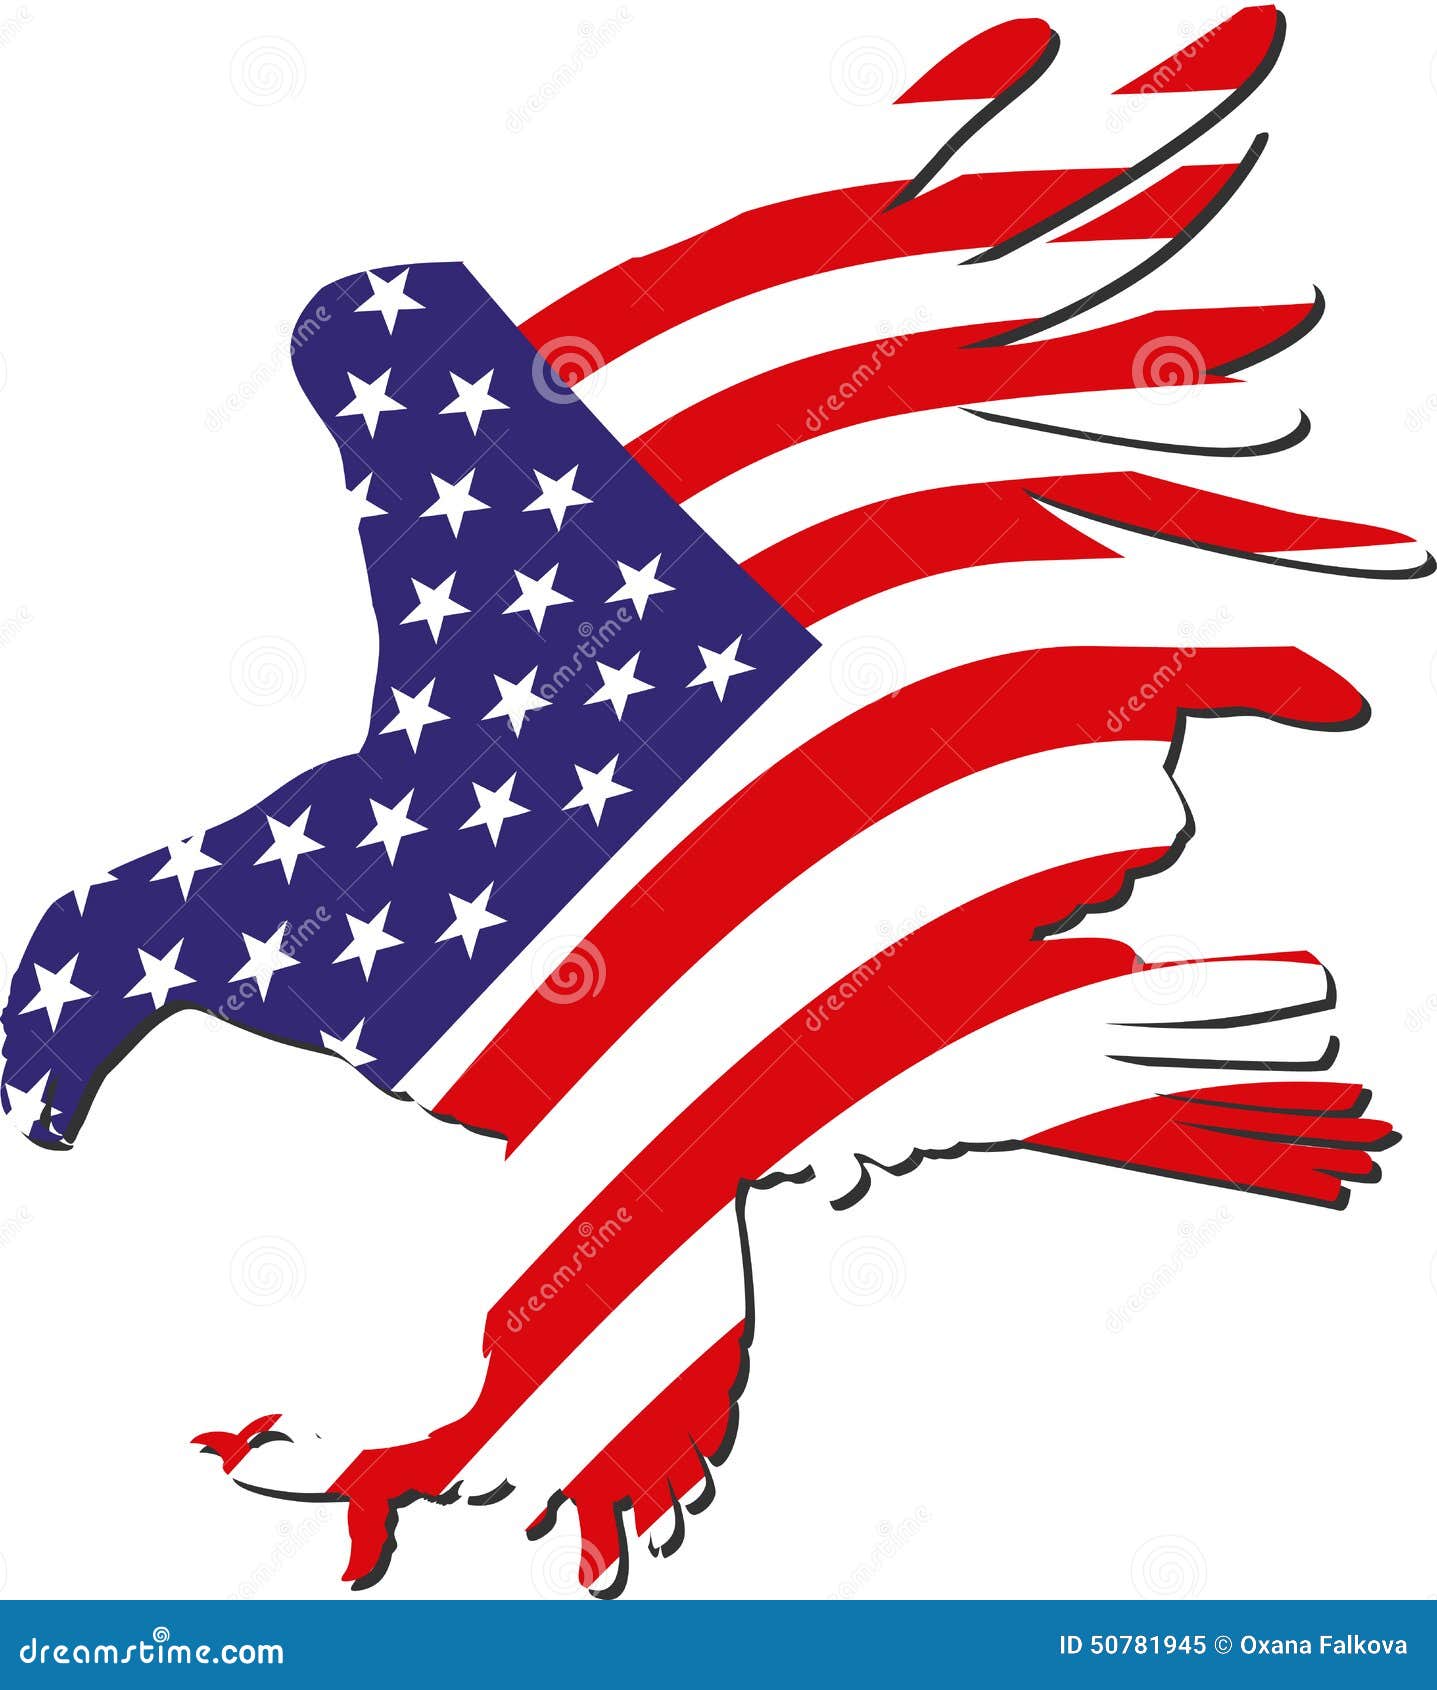 american eagle clip art free - photo #26